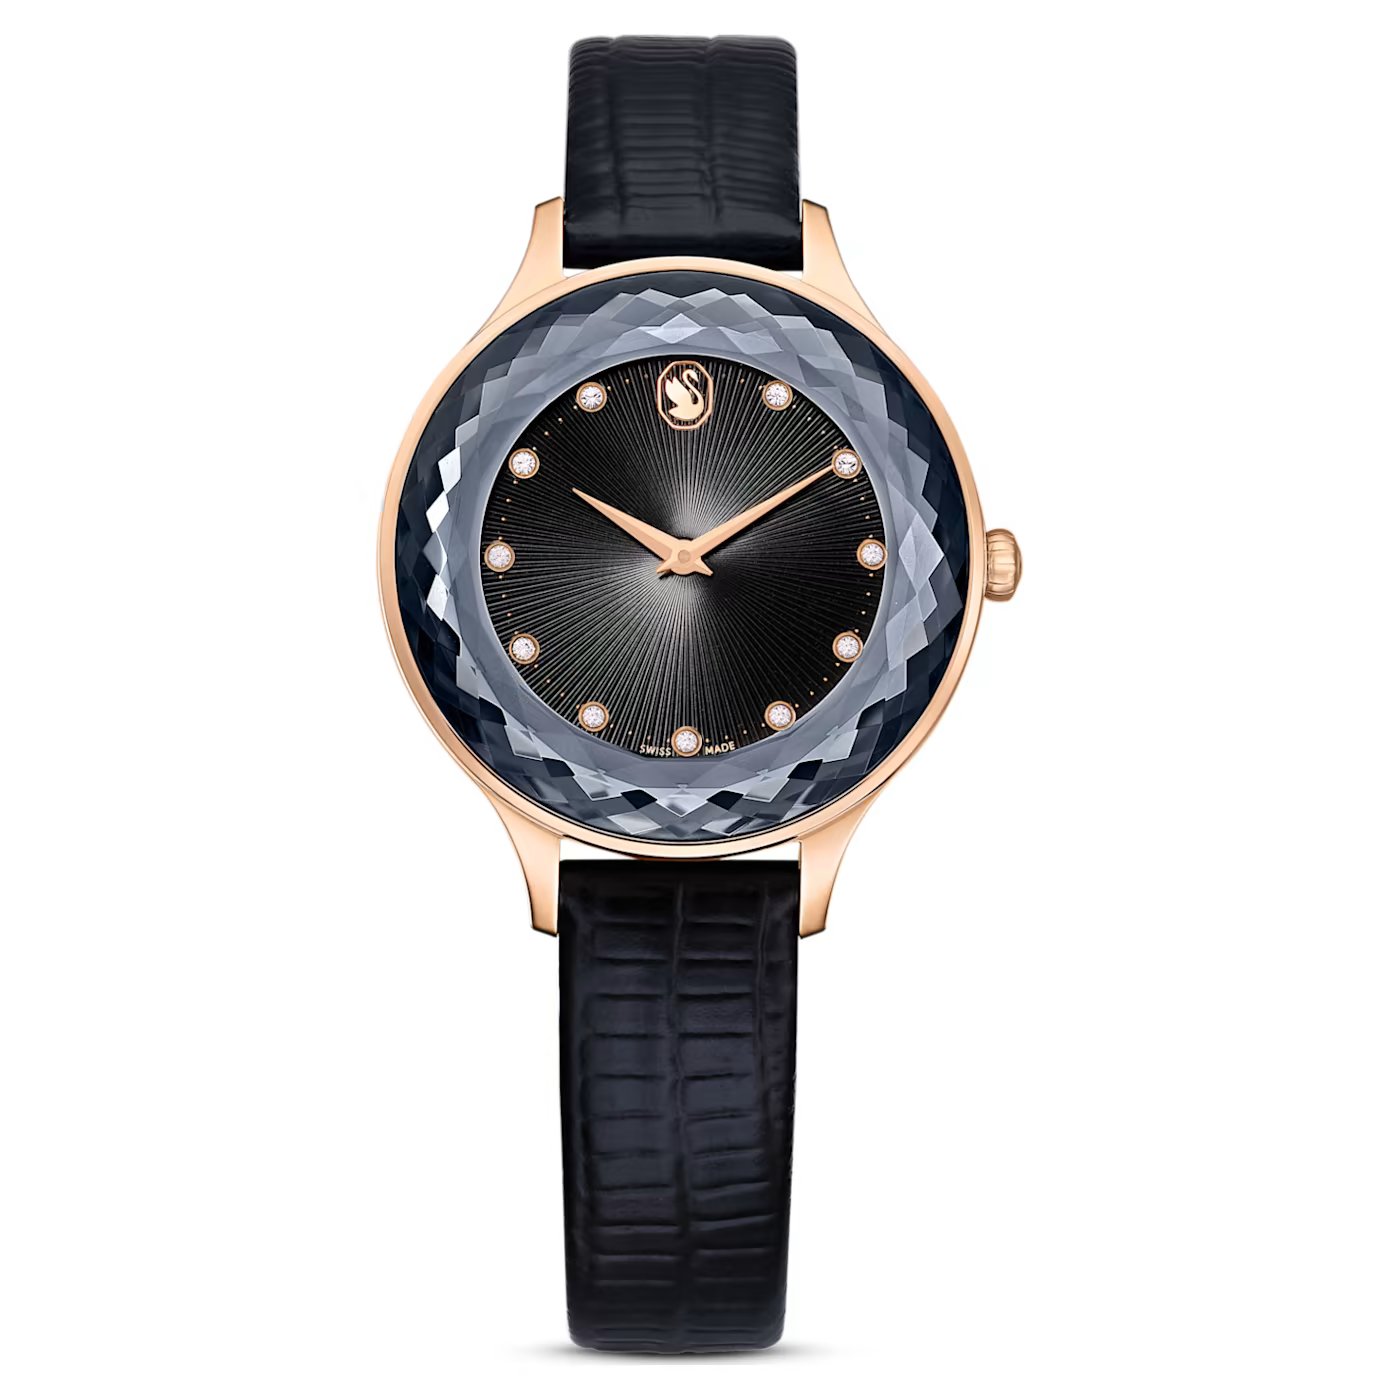 63c9c23d94edc_octea-nova-watch--swiss-made--leather-strap--black--rose-gold-tone-finish-swarovski-5650033.jpg